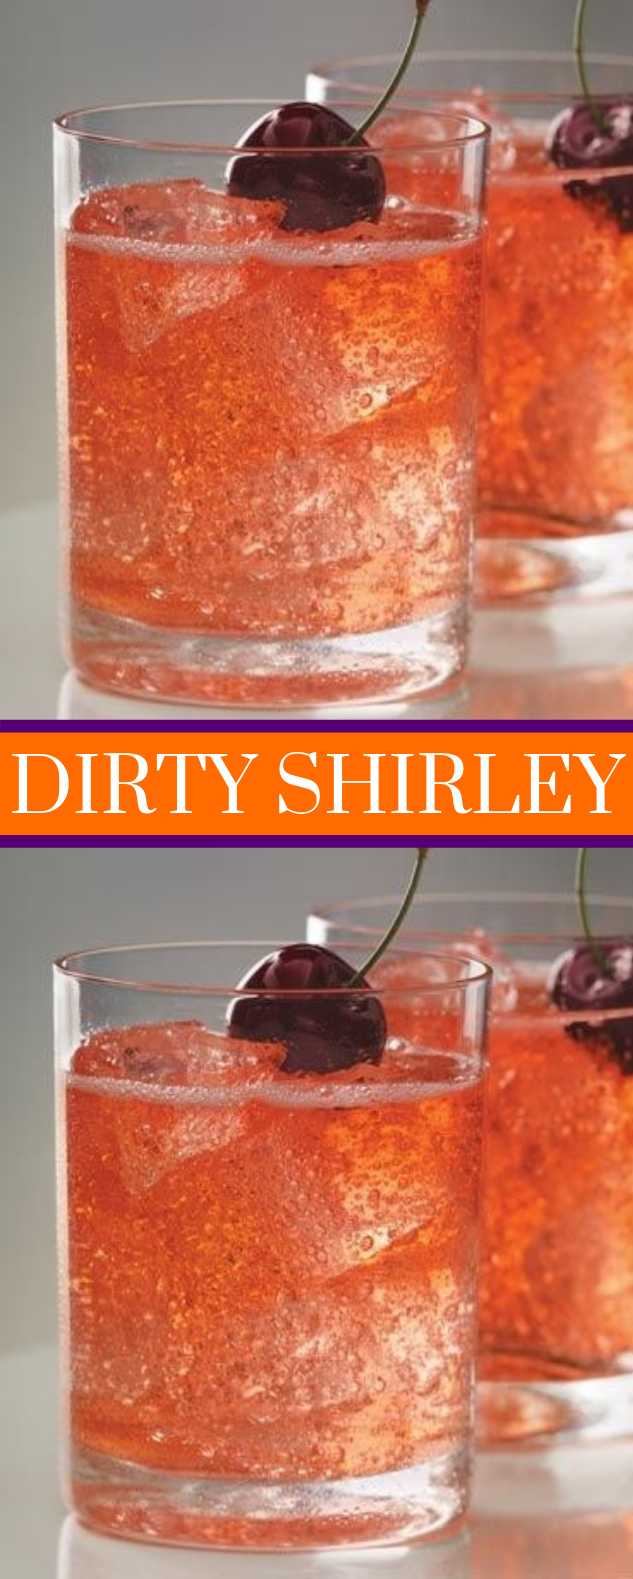 DIRTY SHIRLEY #Drink #Vodka